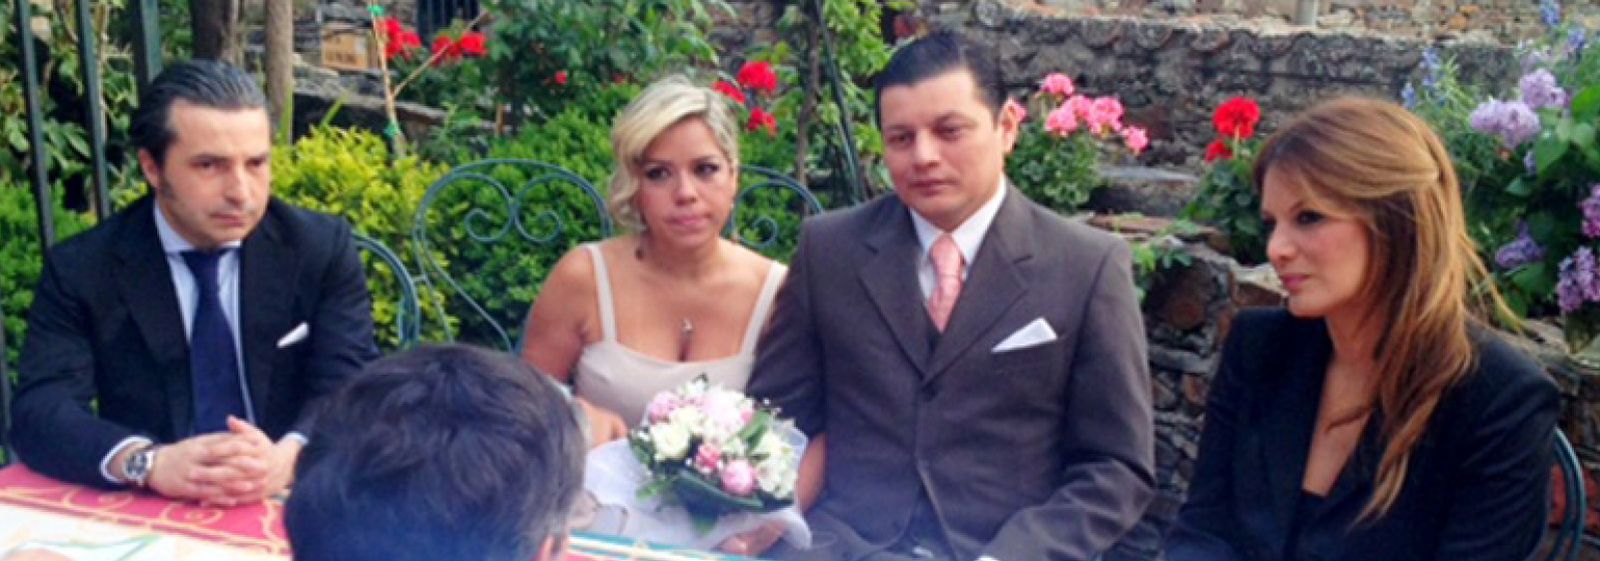 Foto: El nuevo novio ‘rico’ de Ivonne Reyes, Jesús Arranz, padrino en la boda de su cuñado